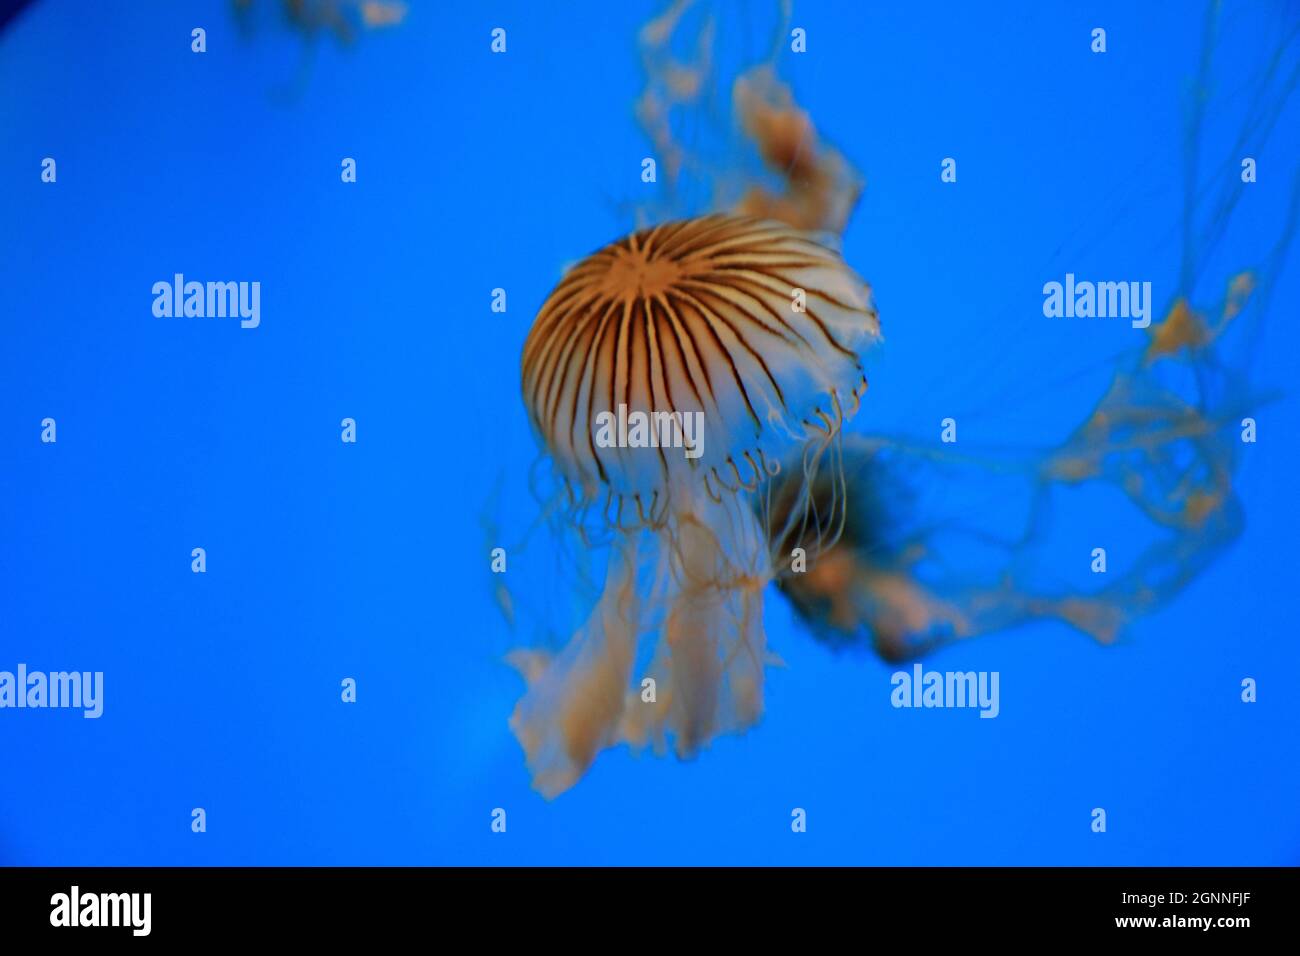 Meduse nuotare in acquario. Foto Stock